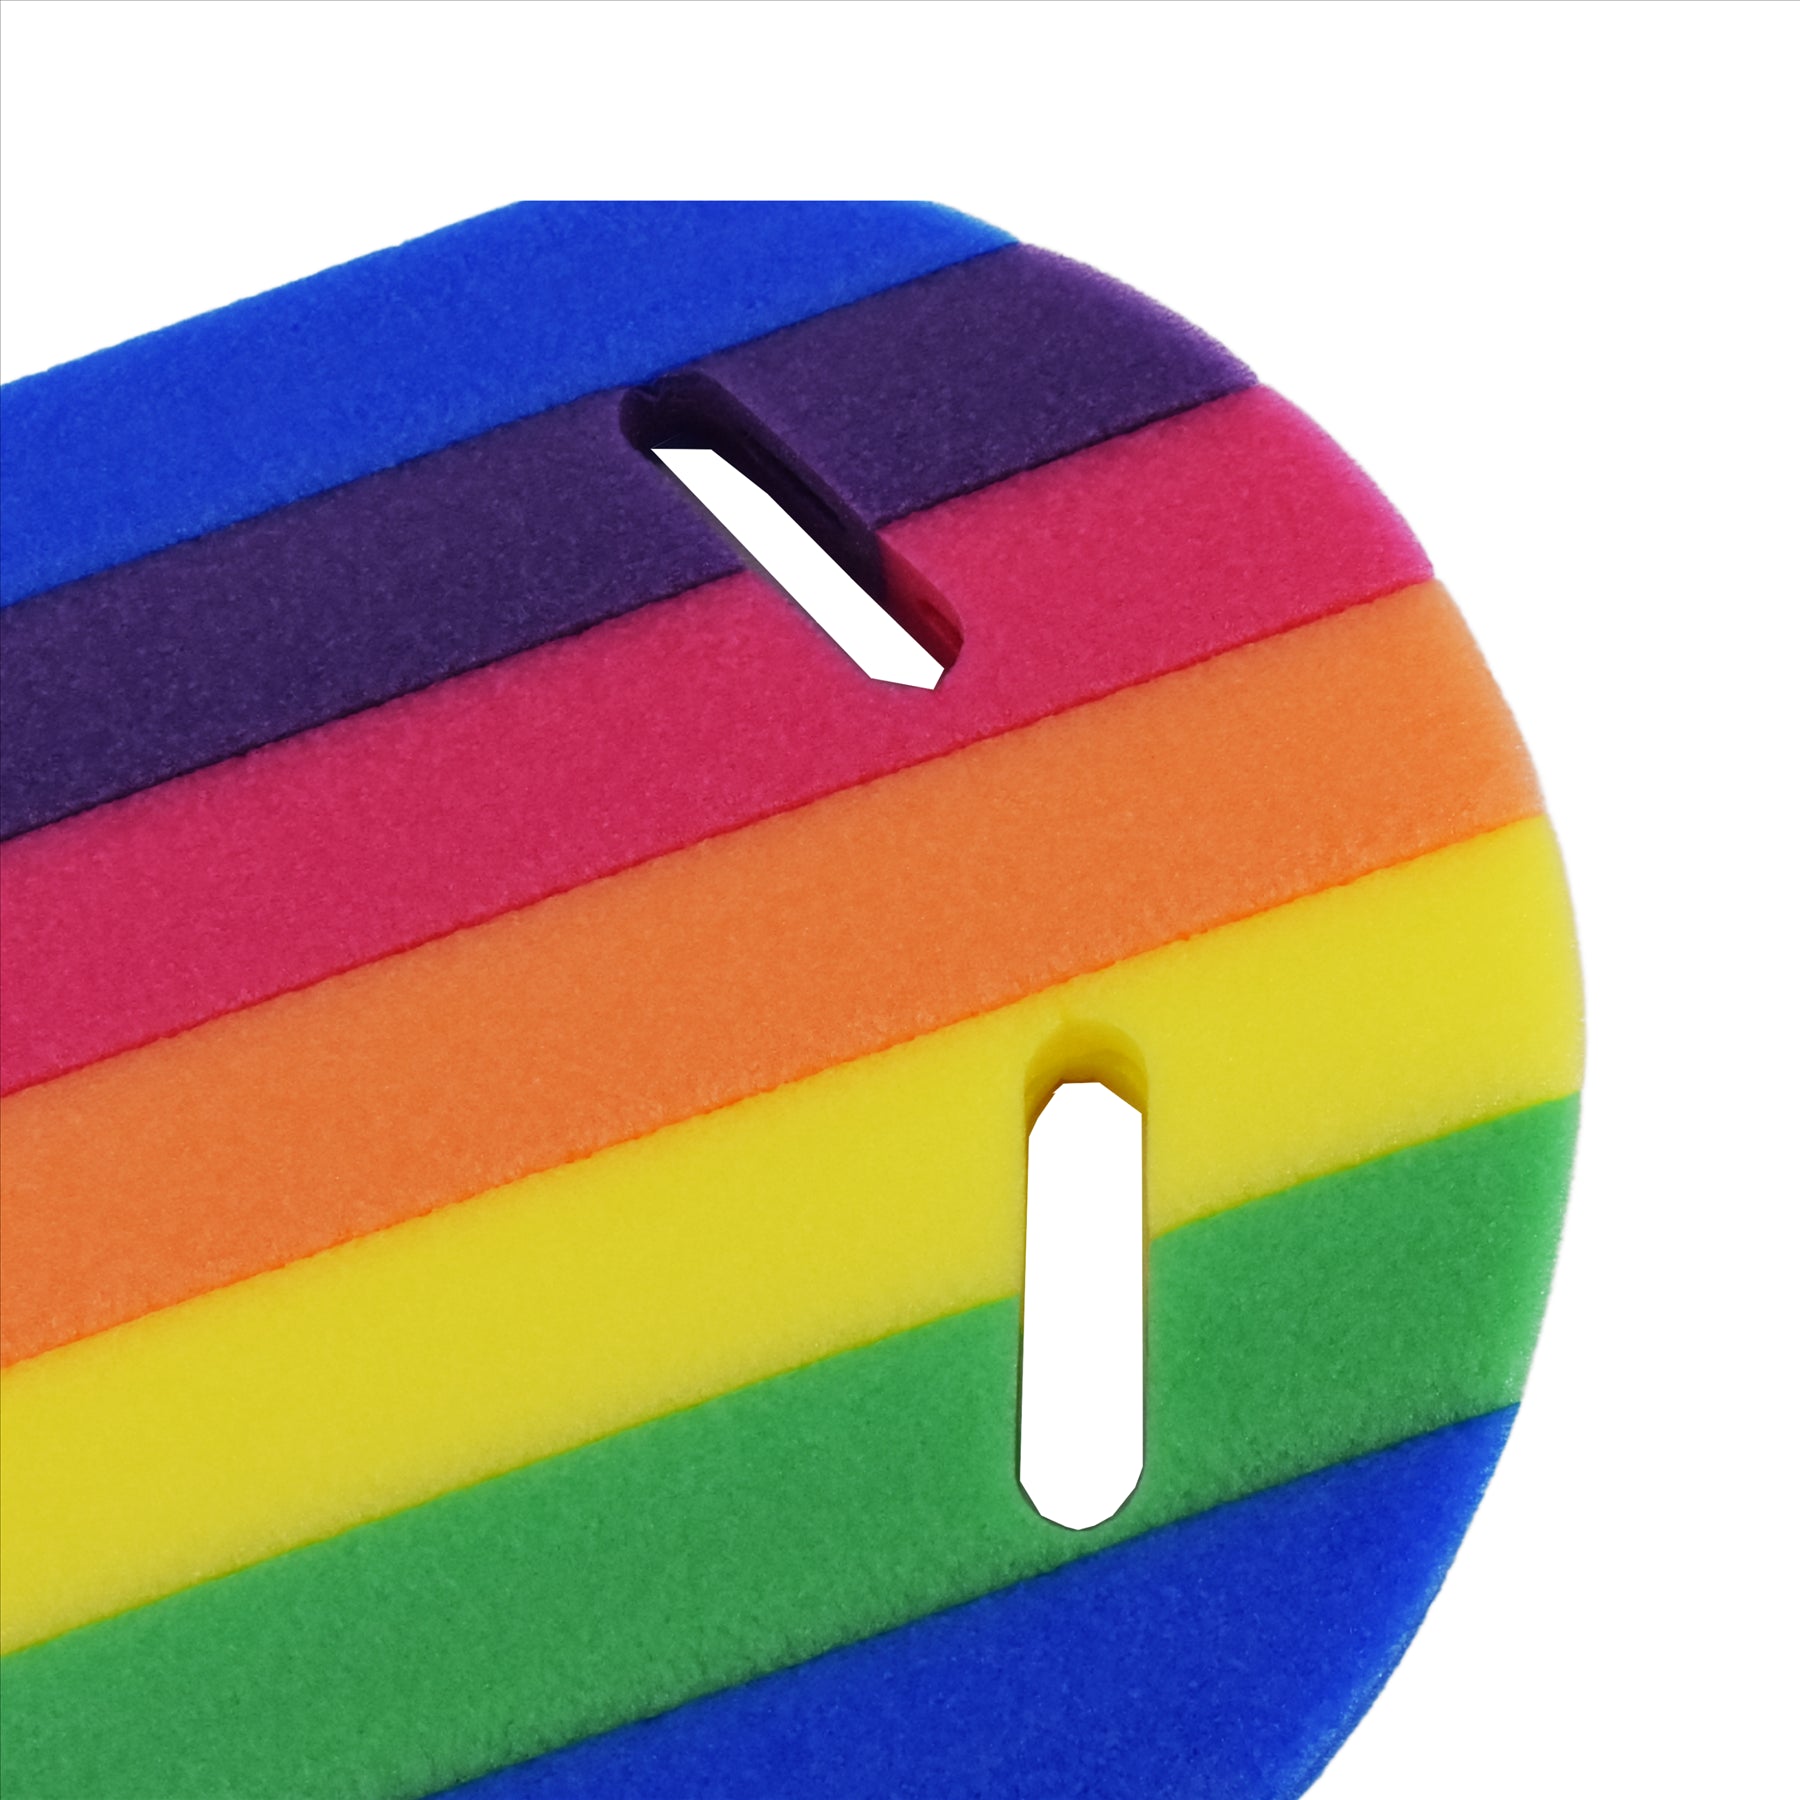 Rainbow Eva Foam Kickboard by Geezy - The Magic Toy Shop